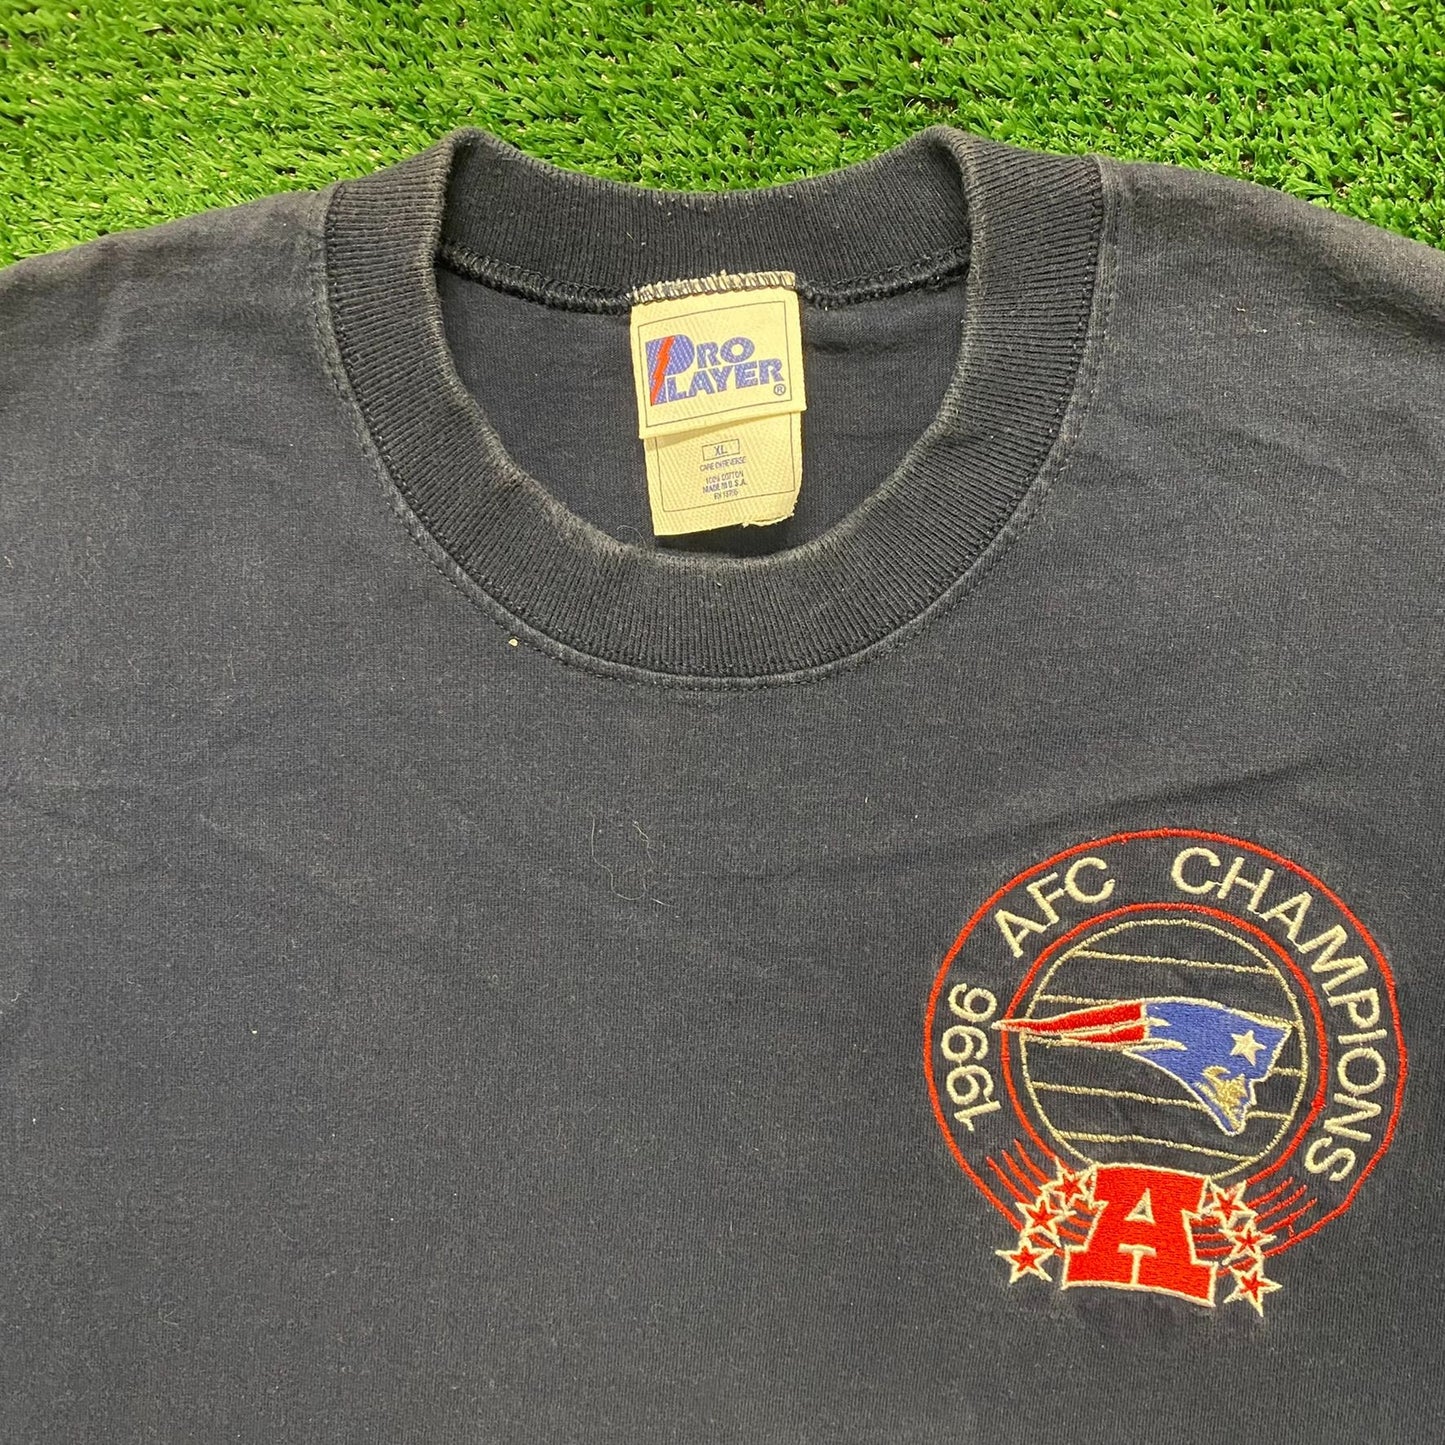 New England Patriots Vintage 90s NFL Football T-Shirt